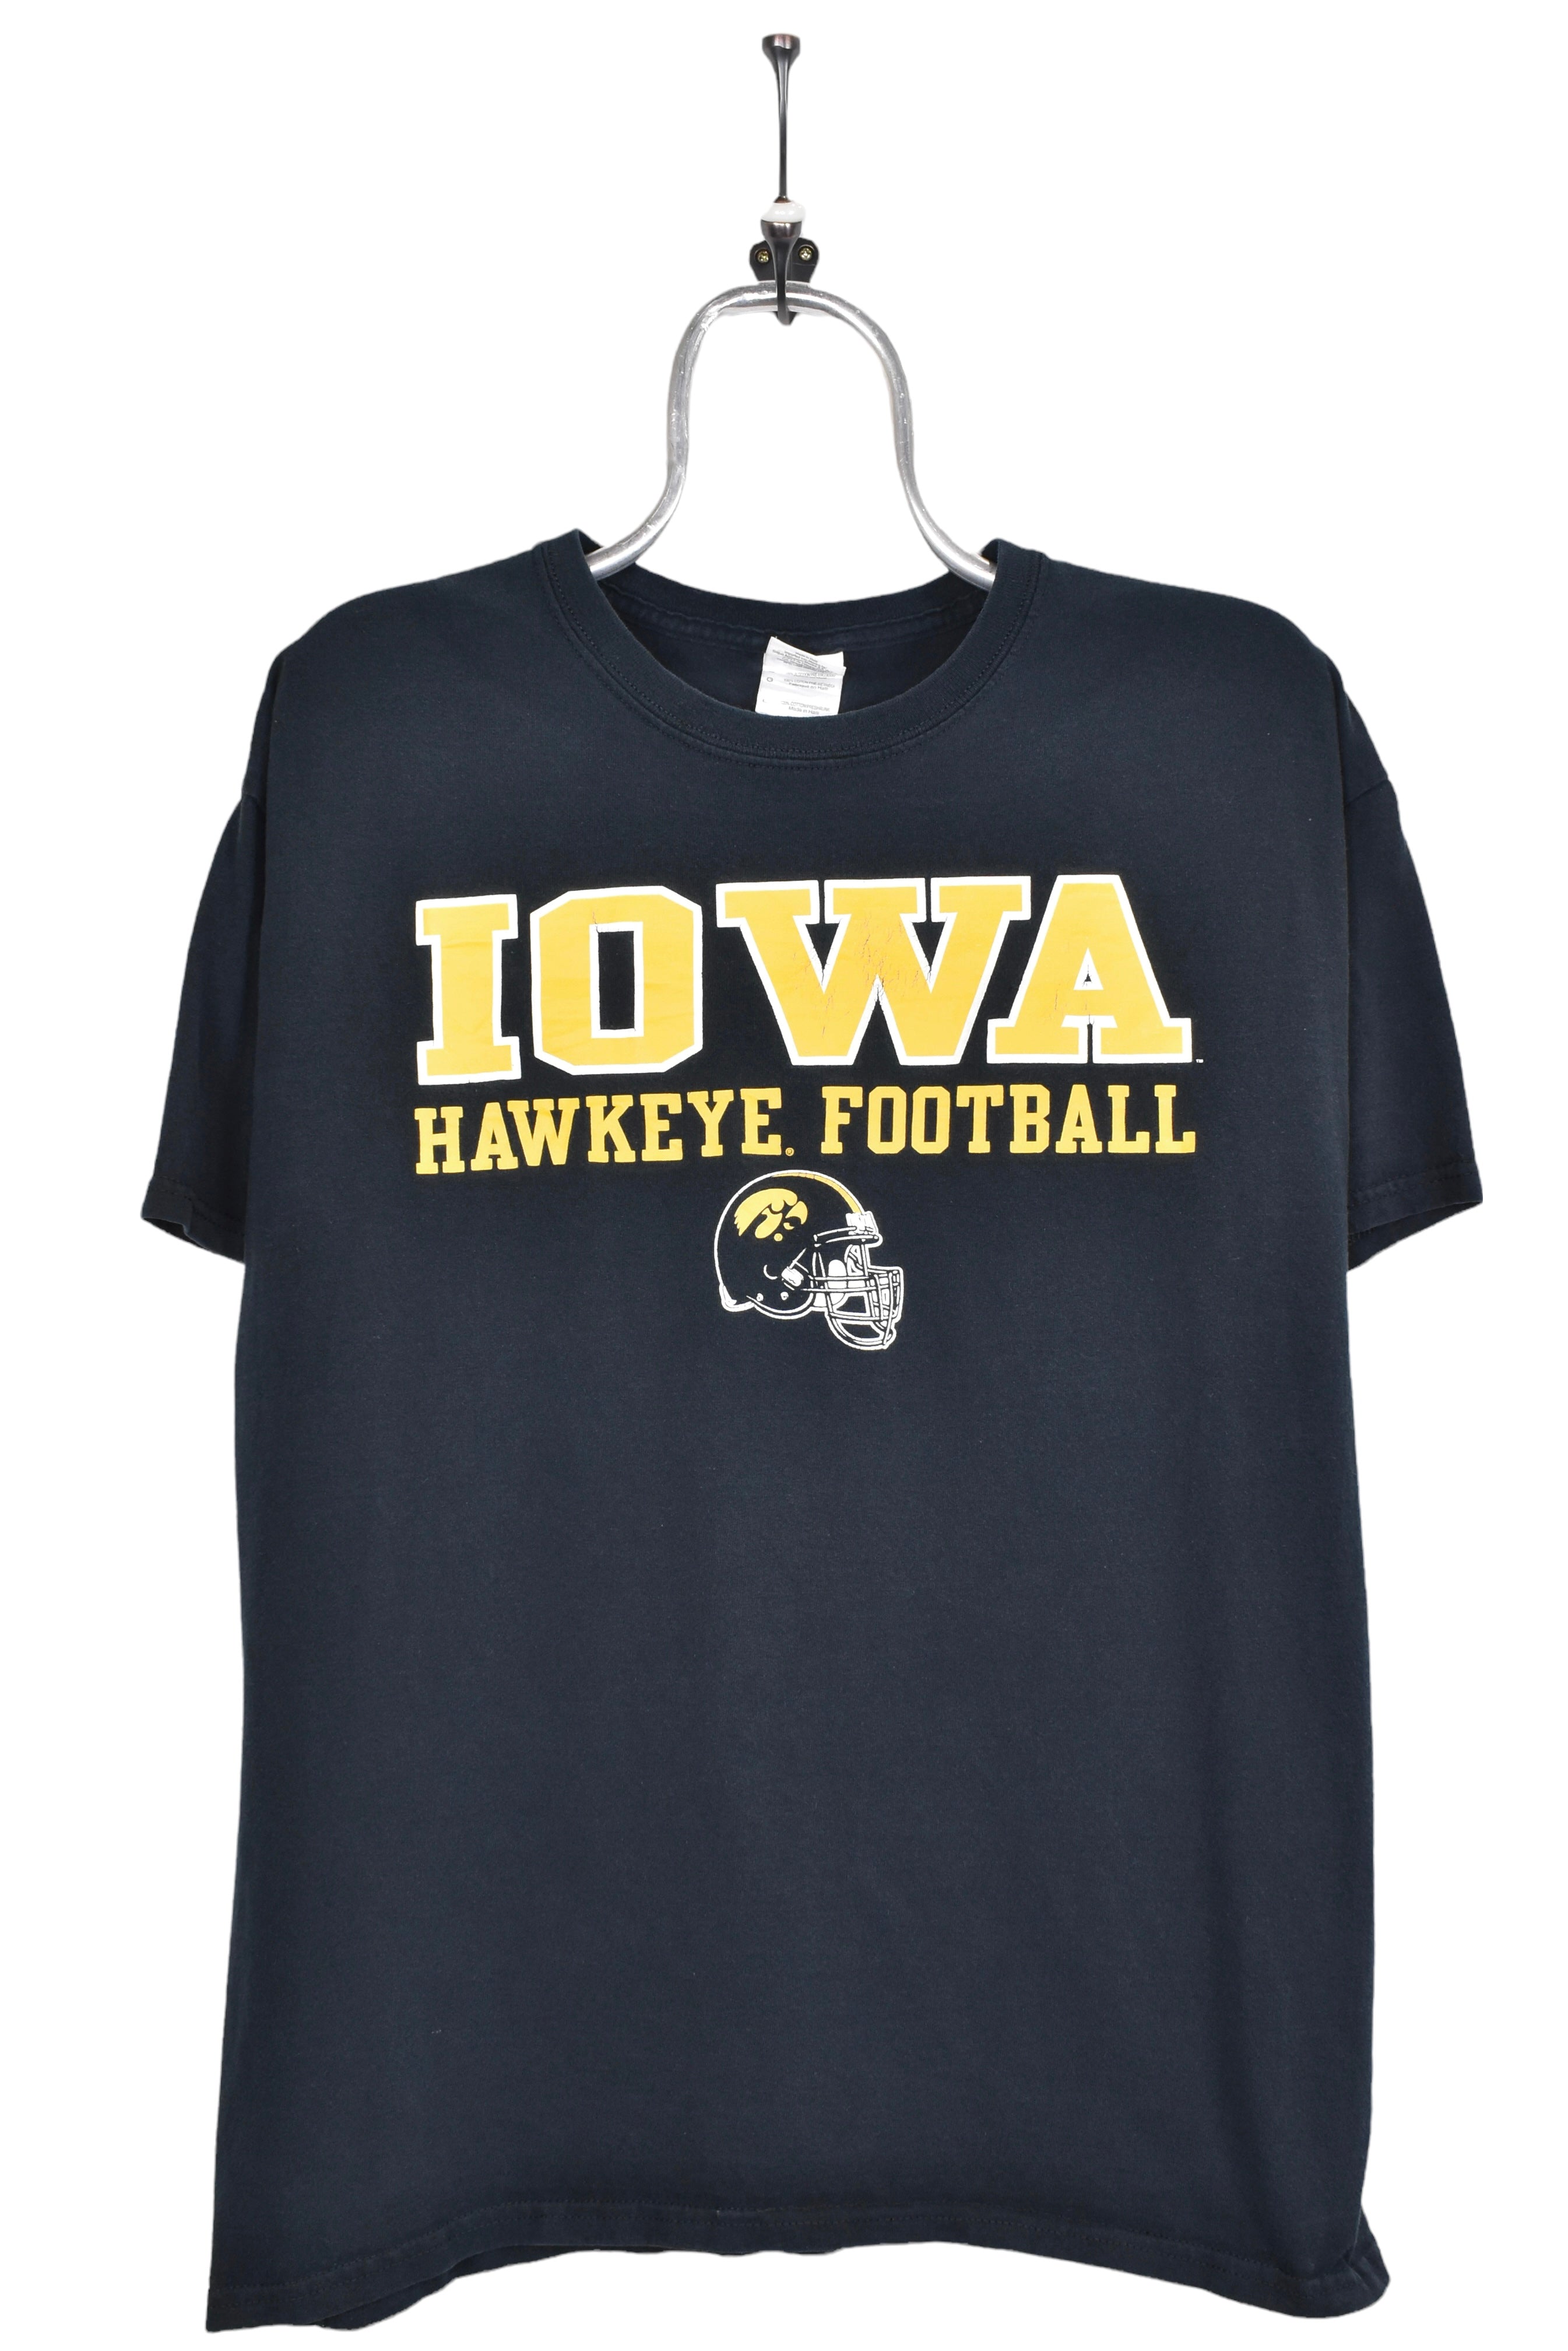 Vintage University of Iowa shirt, Hawkeye football black graphic tee - AU Large COLLEGE